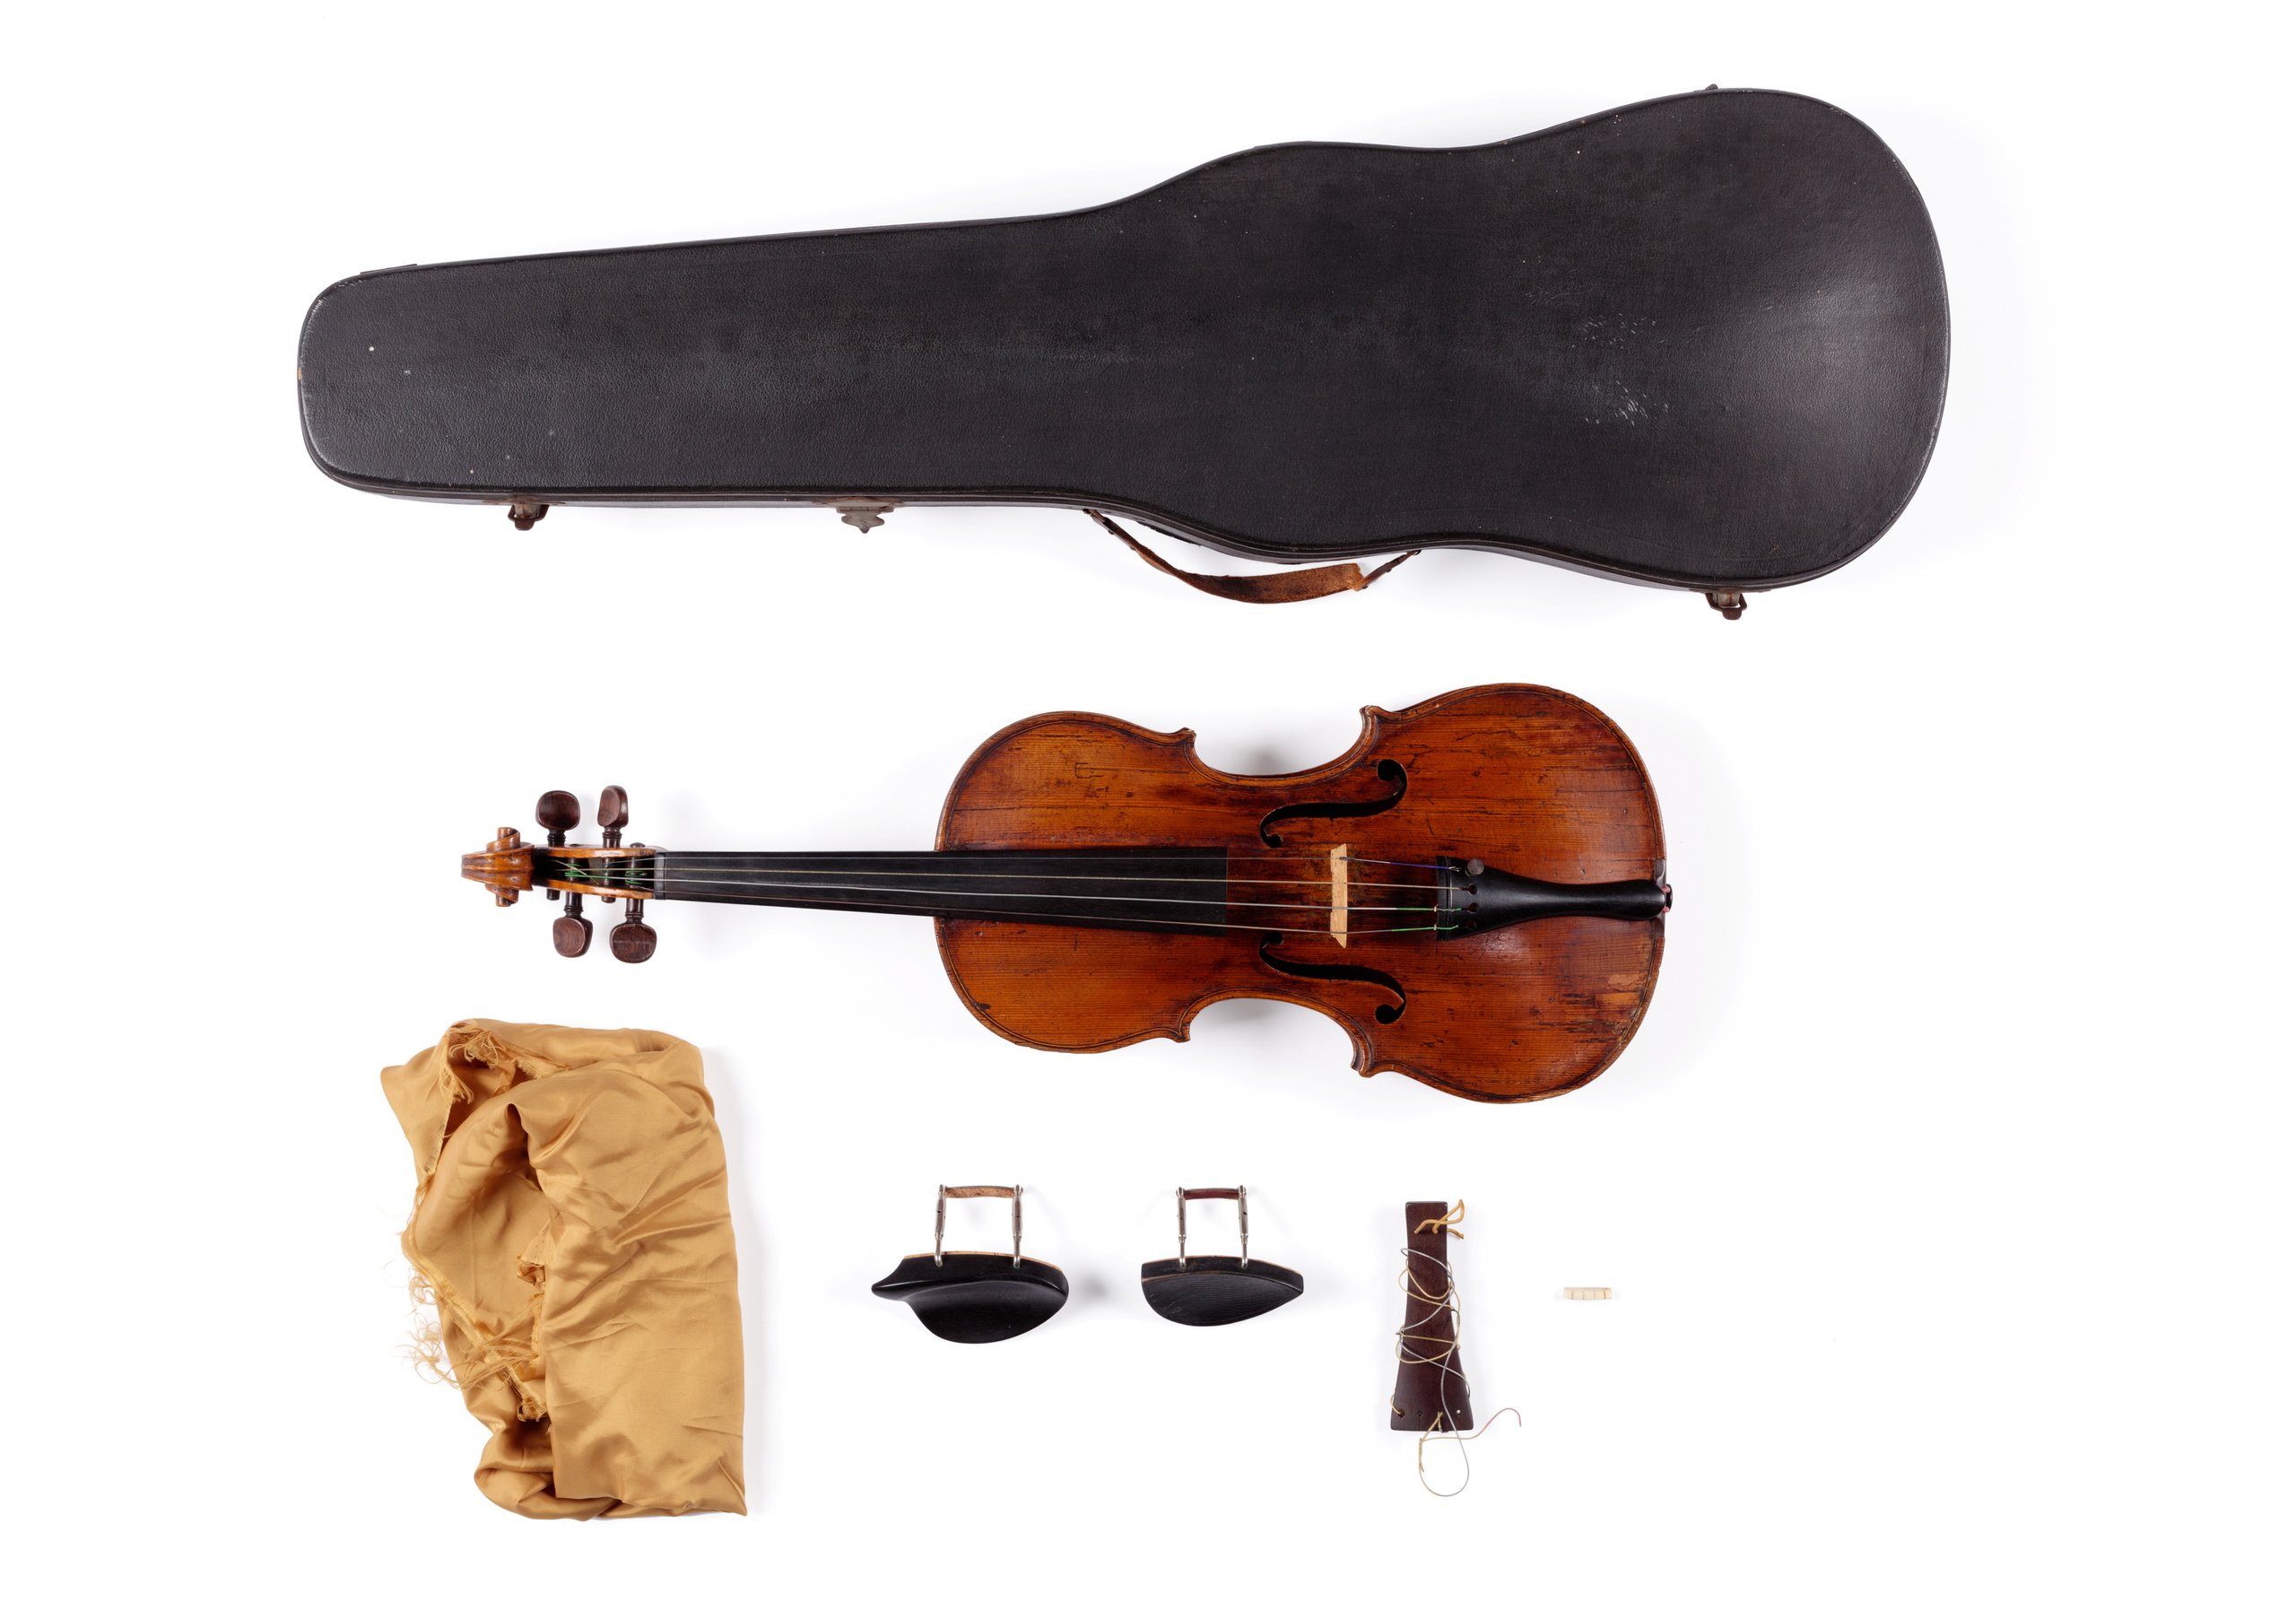 Violin made by Barak Norman